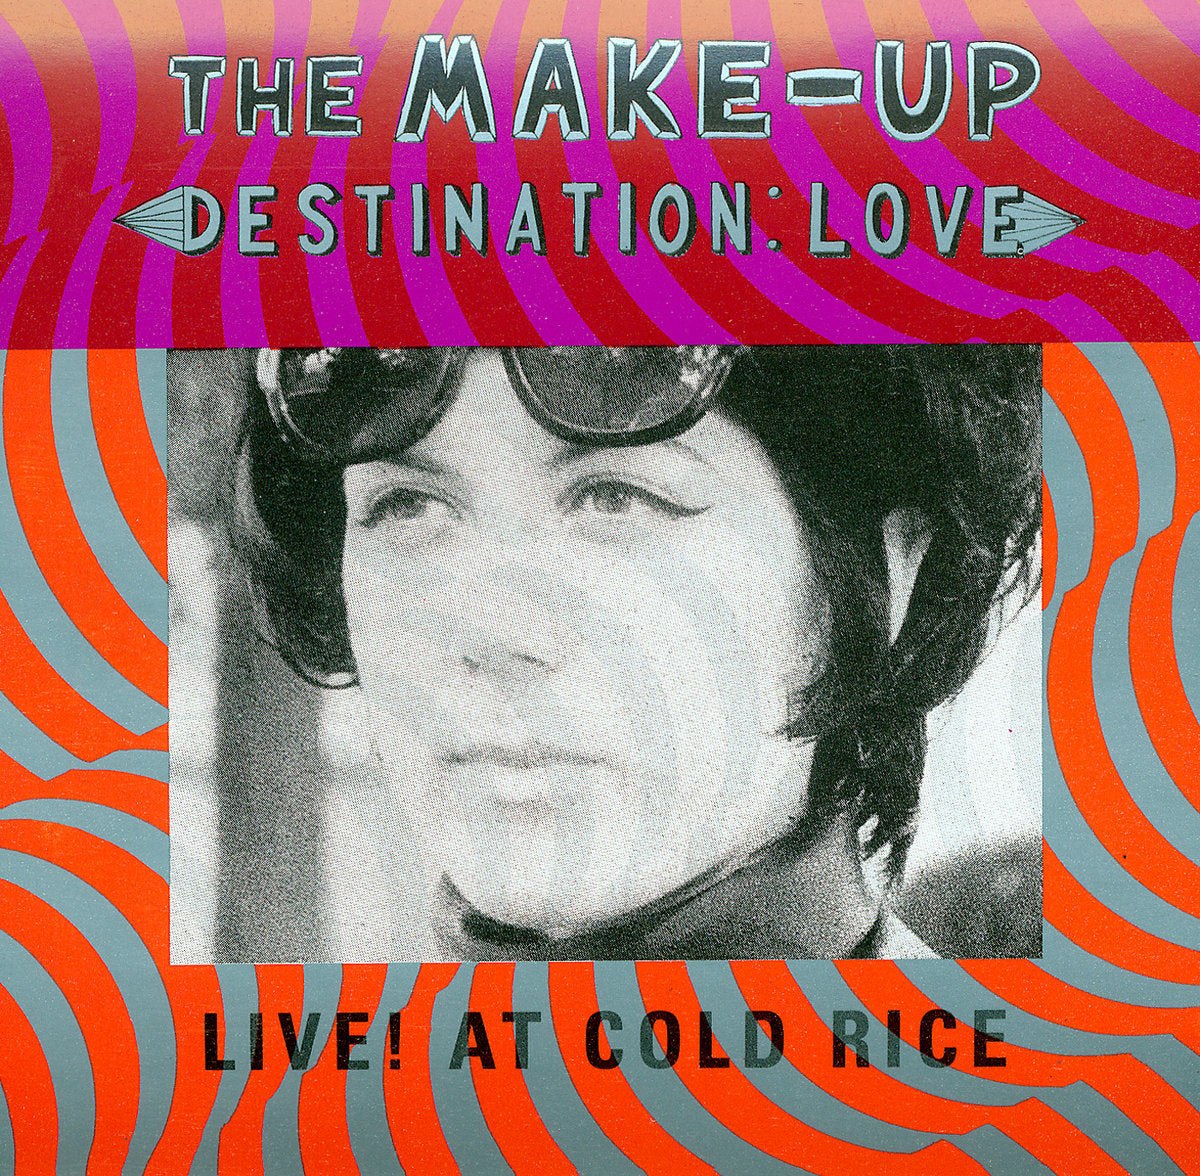 The Make-Up - Destination: Love; Live! At Cold Rice LP